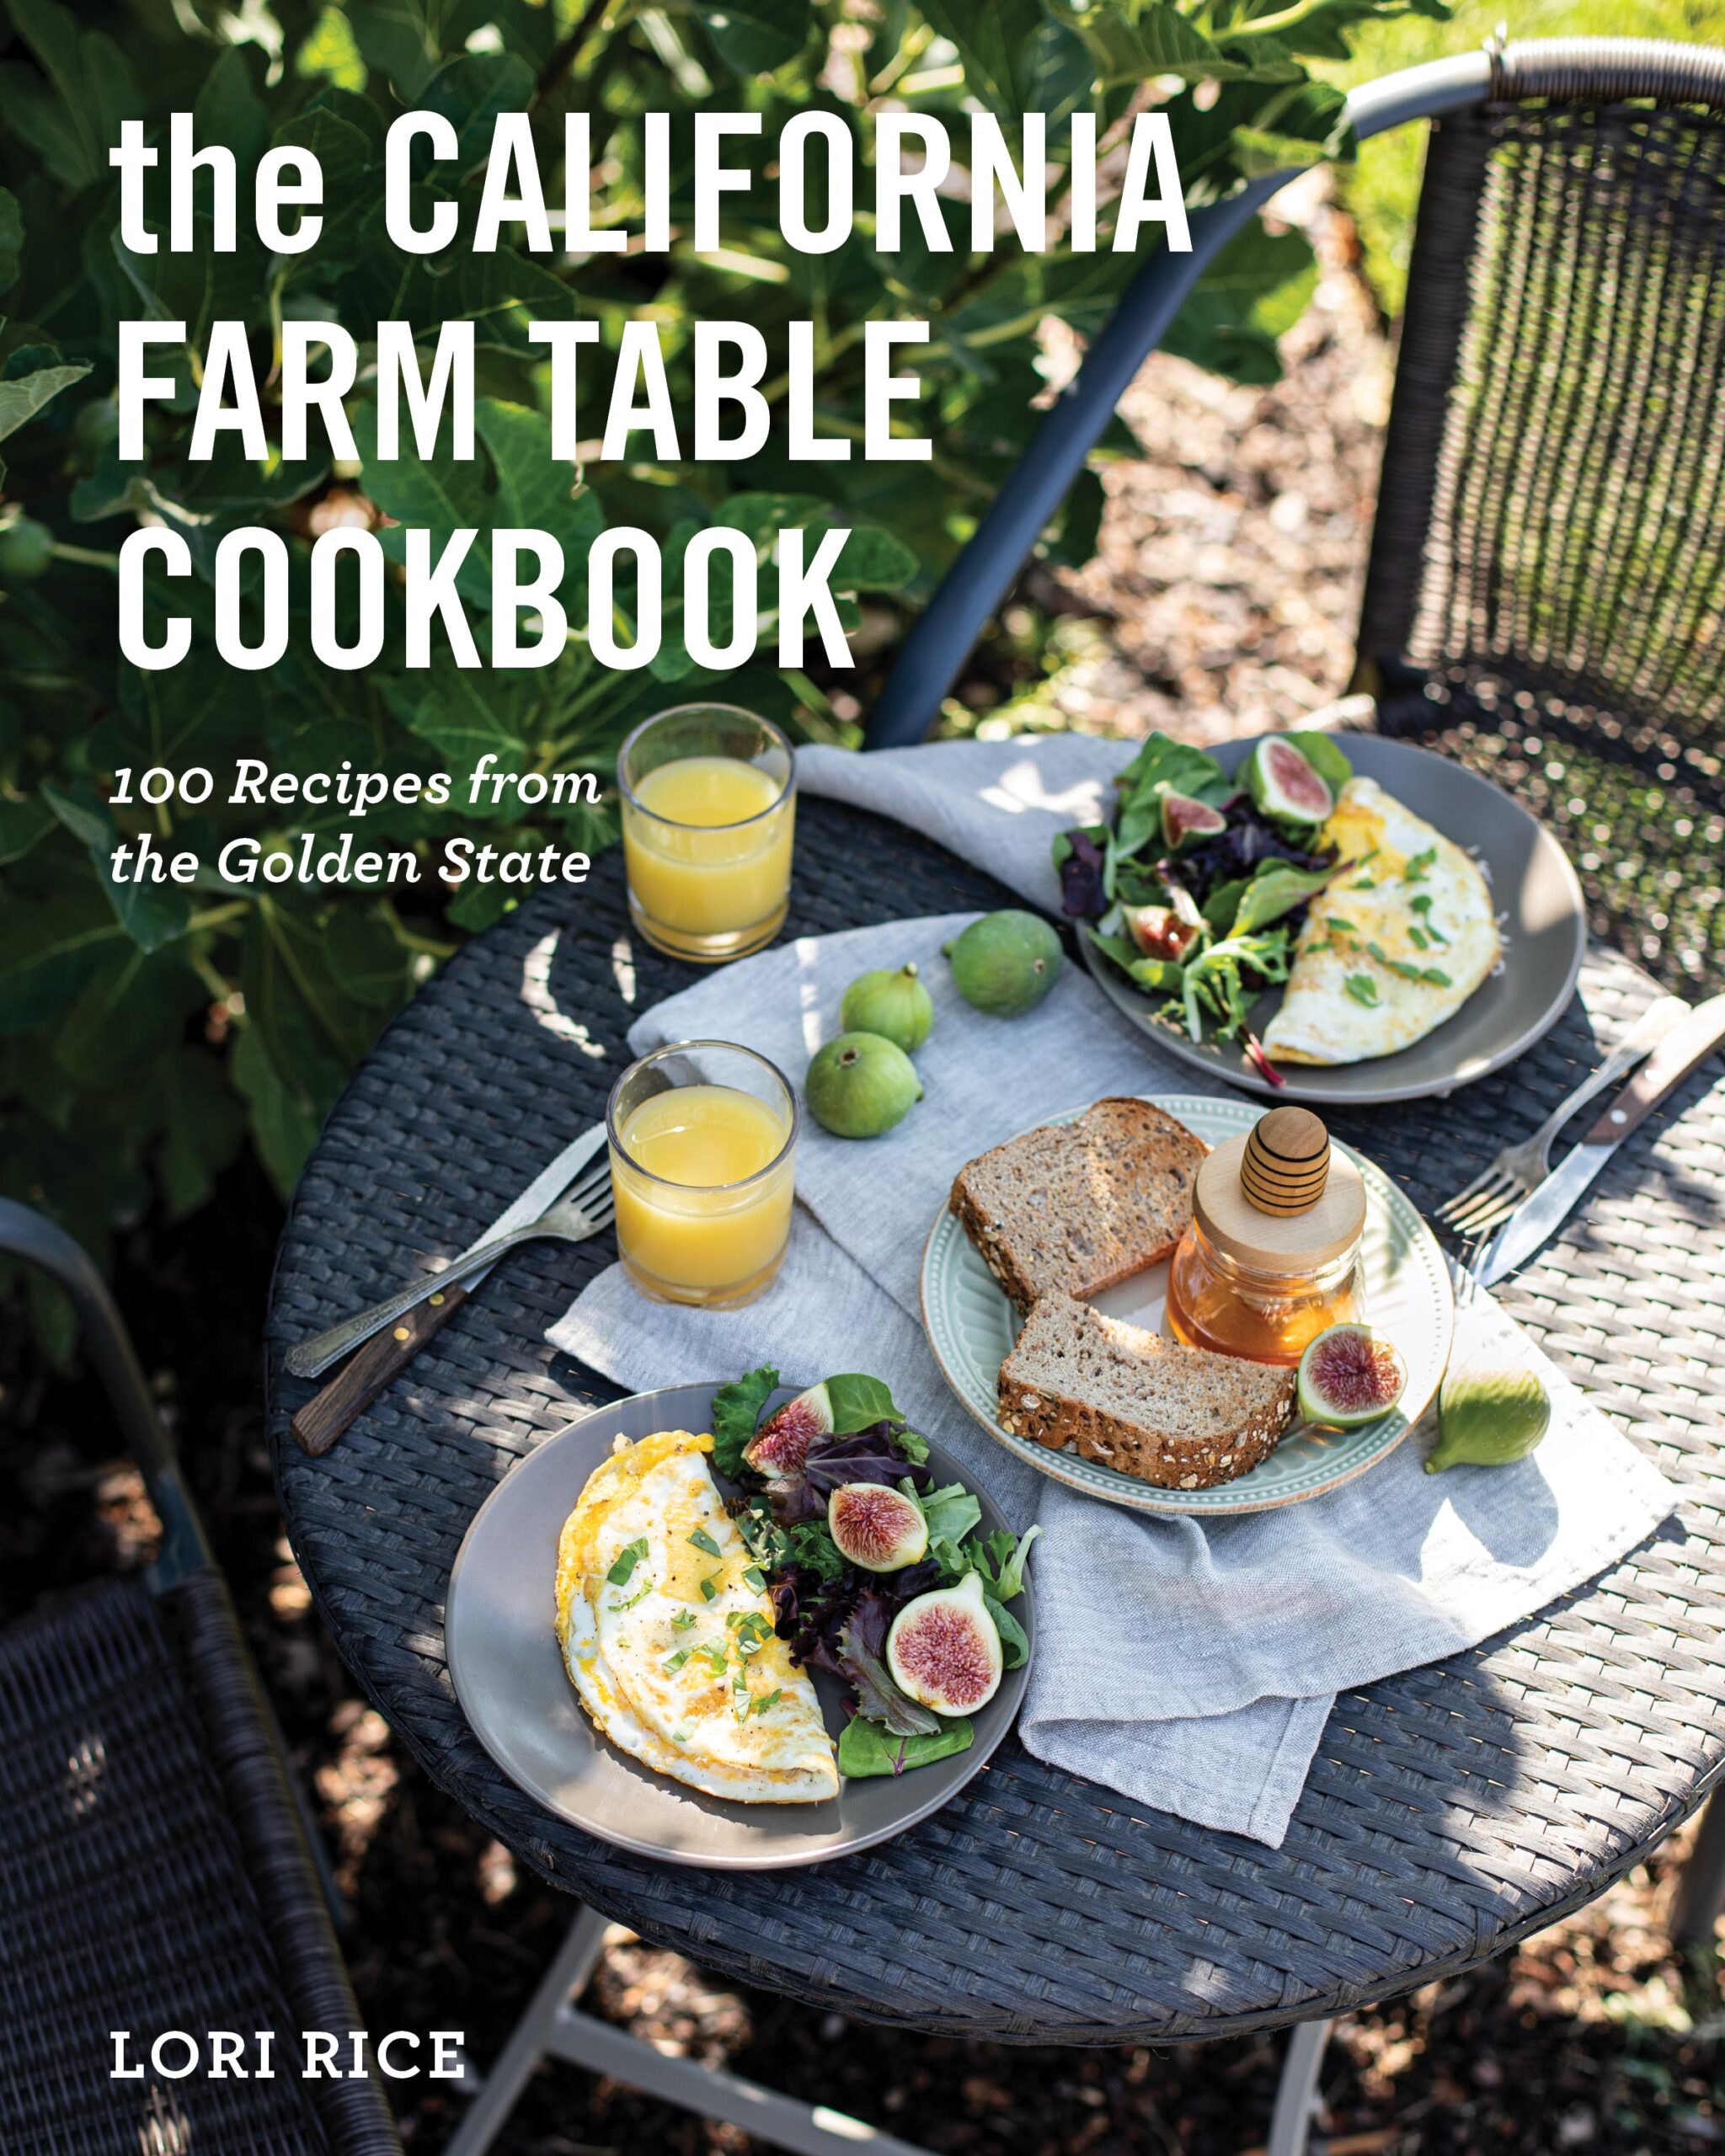 California Farm Table Cookbook Launch Party